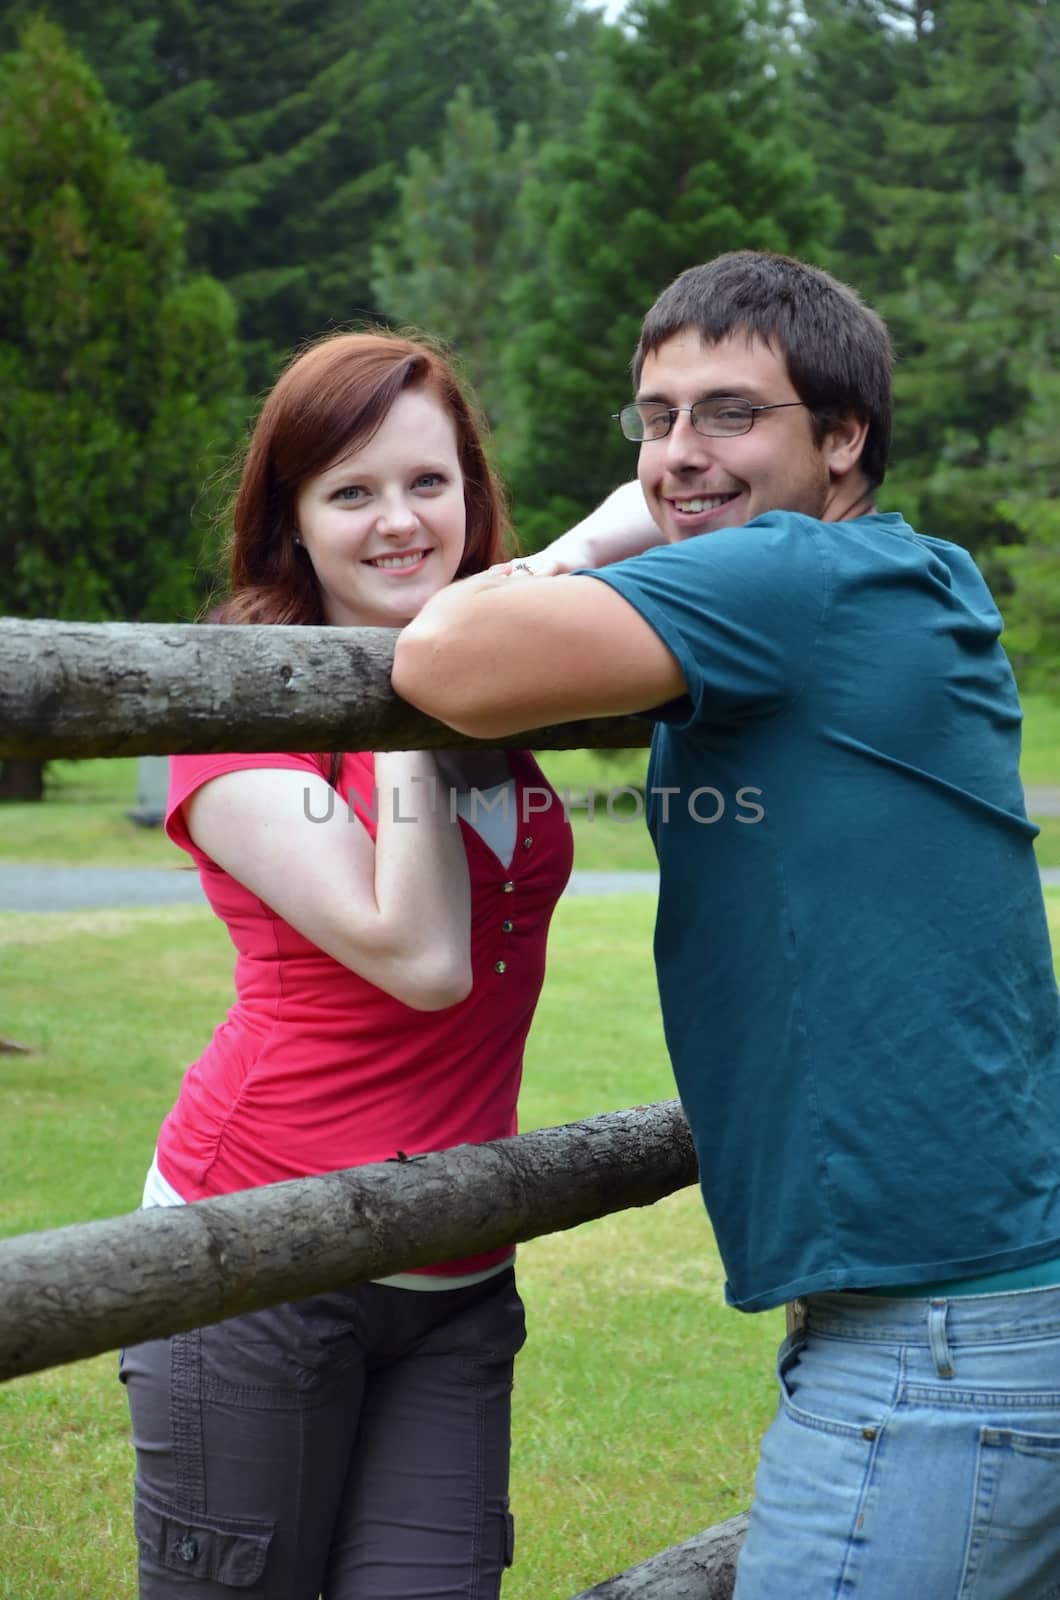 Young engaged couple enjoying summer day